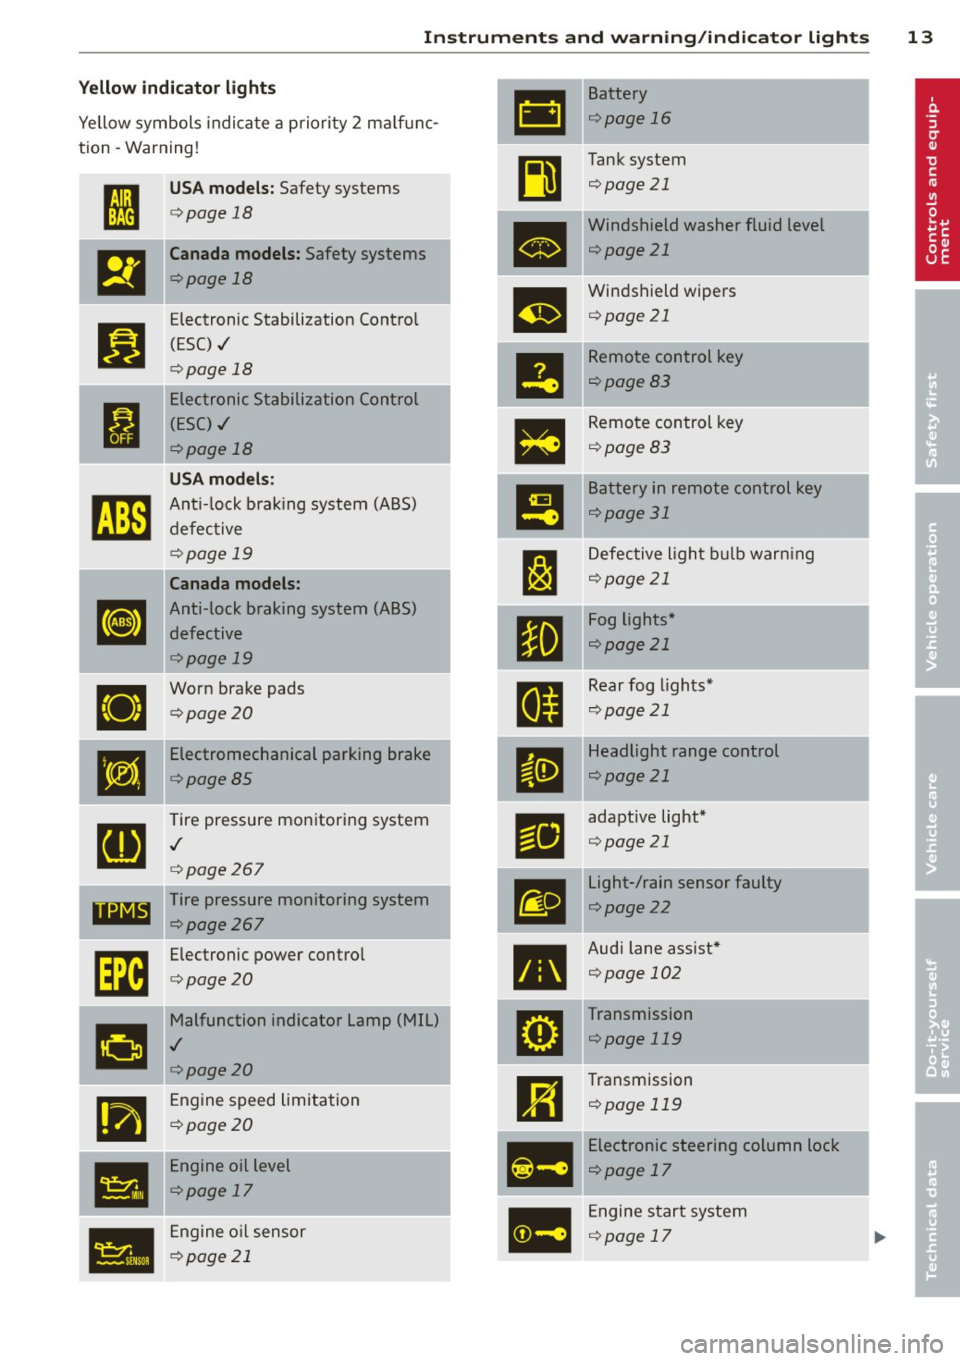 AUDI S8 2013  Owners Manual Instrument s and  warnin g/indic ator  ligh ts 13 
Yellow  indi cator  li ght s 
Yellow  symbols  indica te a priority  2 ma lf u nc­
tion  -Warning! 
I 
I 
• 
[I] 
., 
• 
• 
U SA models: Safet